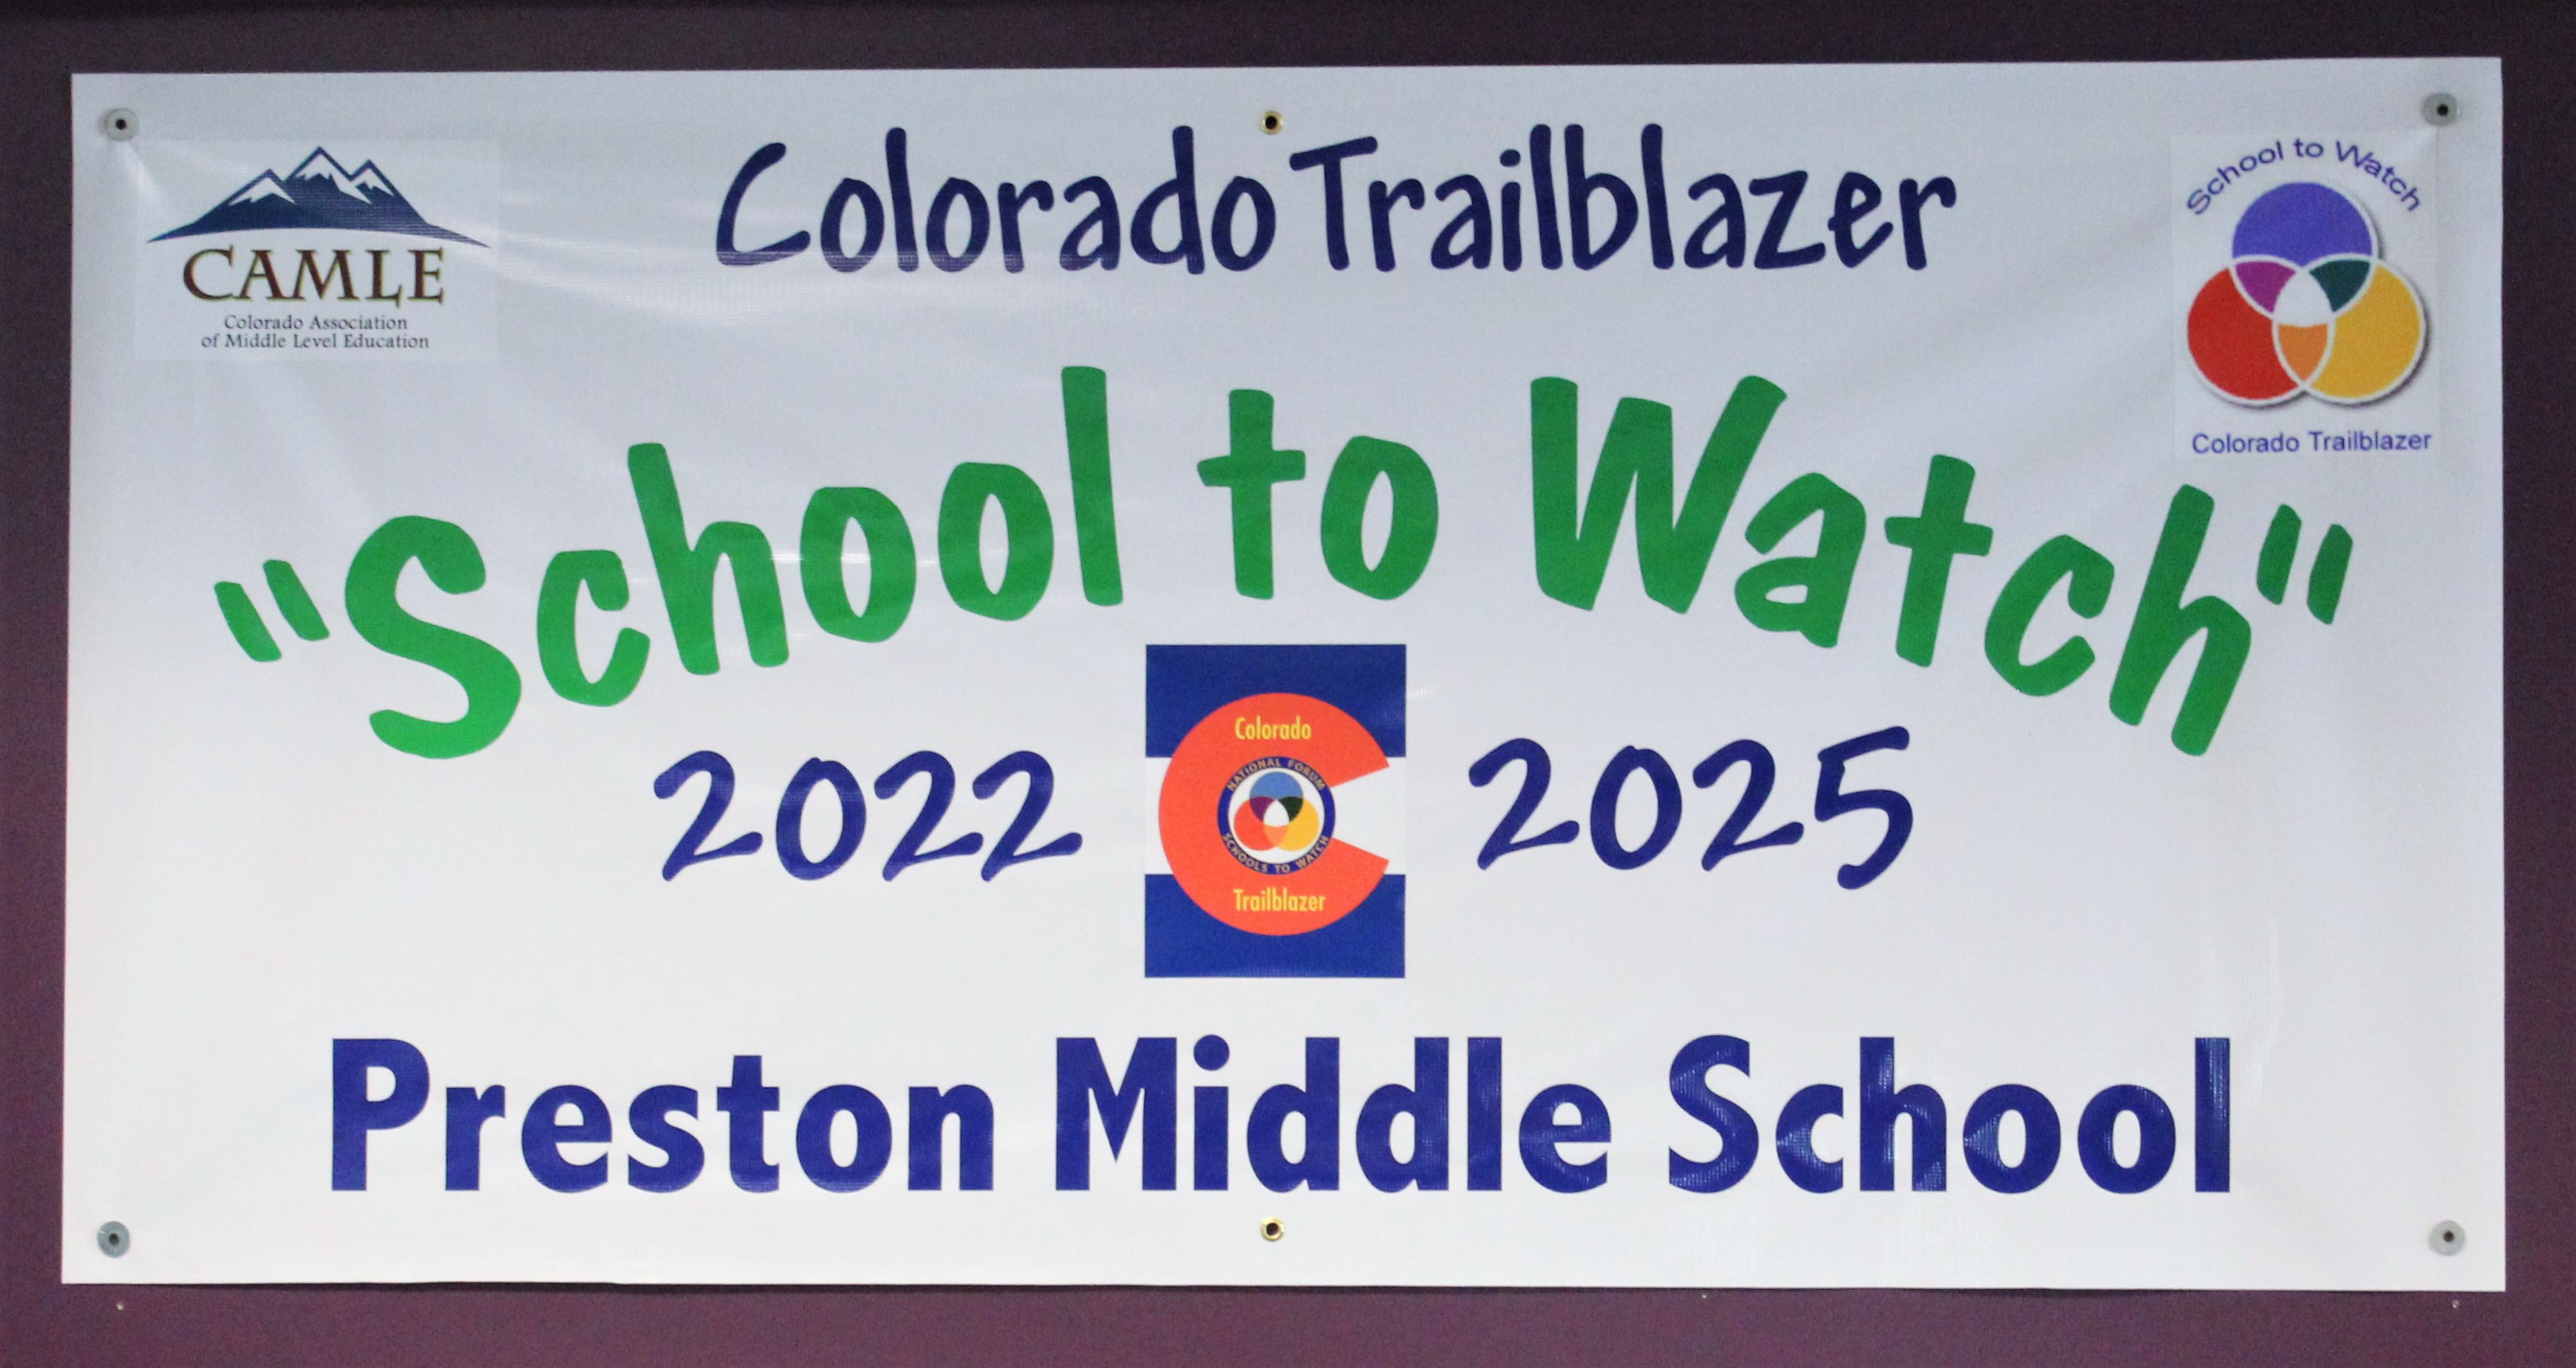 2022-2025 School to Watch